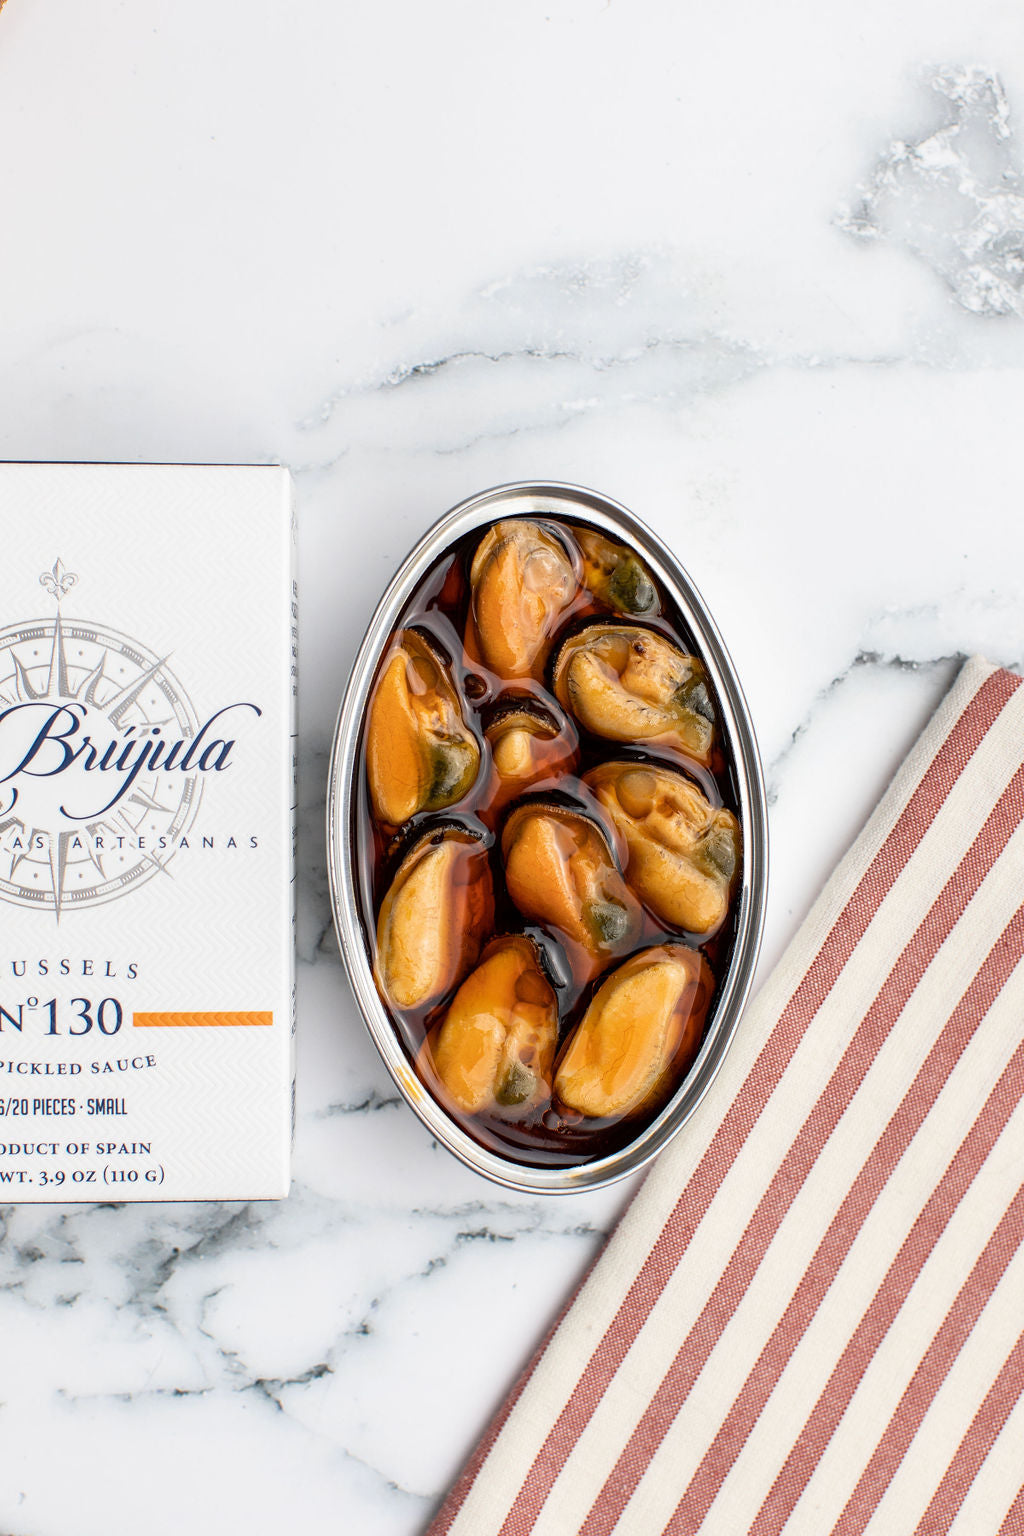 La Brujula Mussels in Pickled Sauce